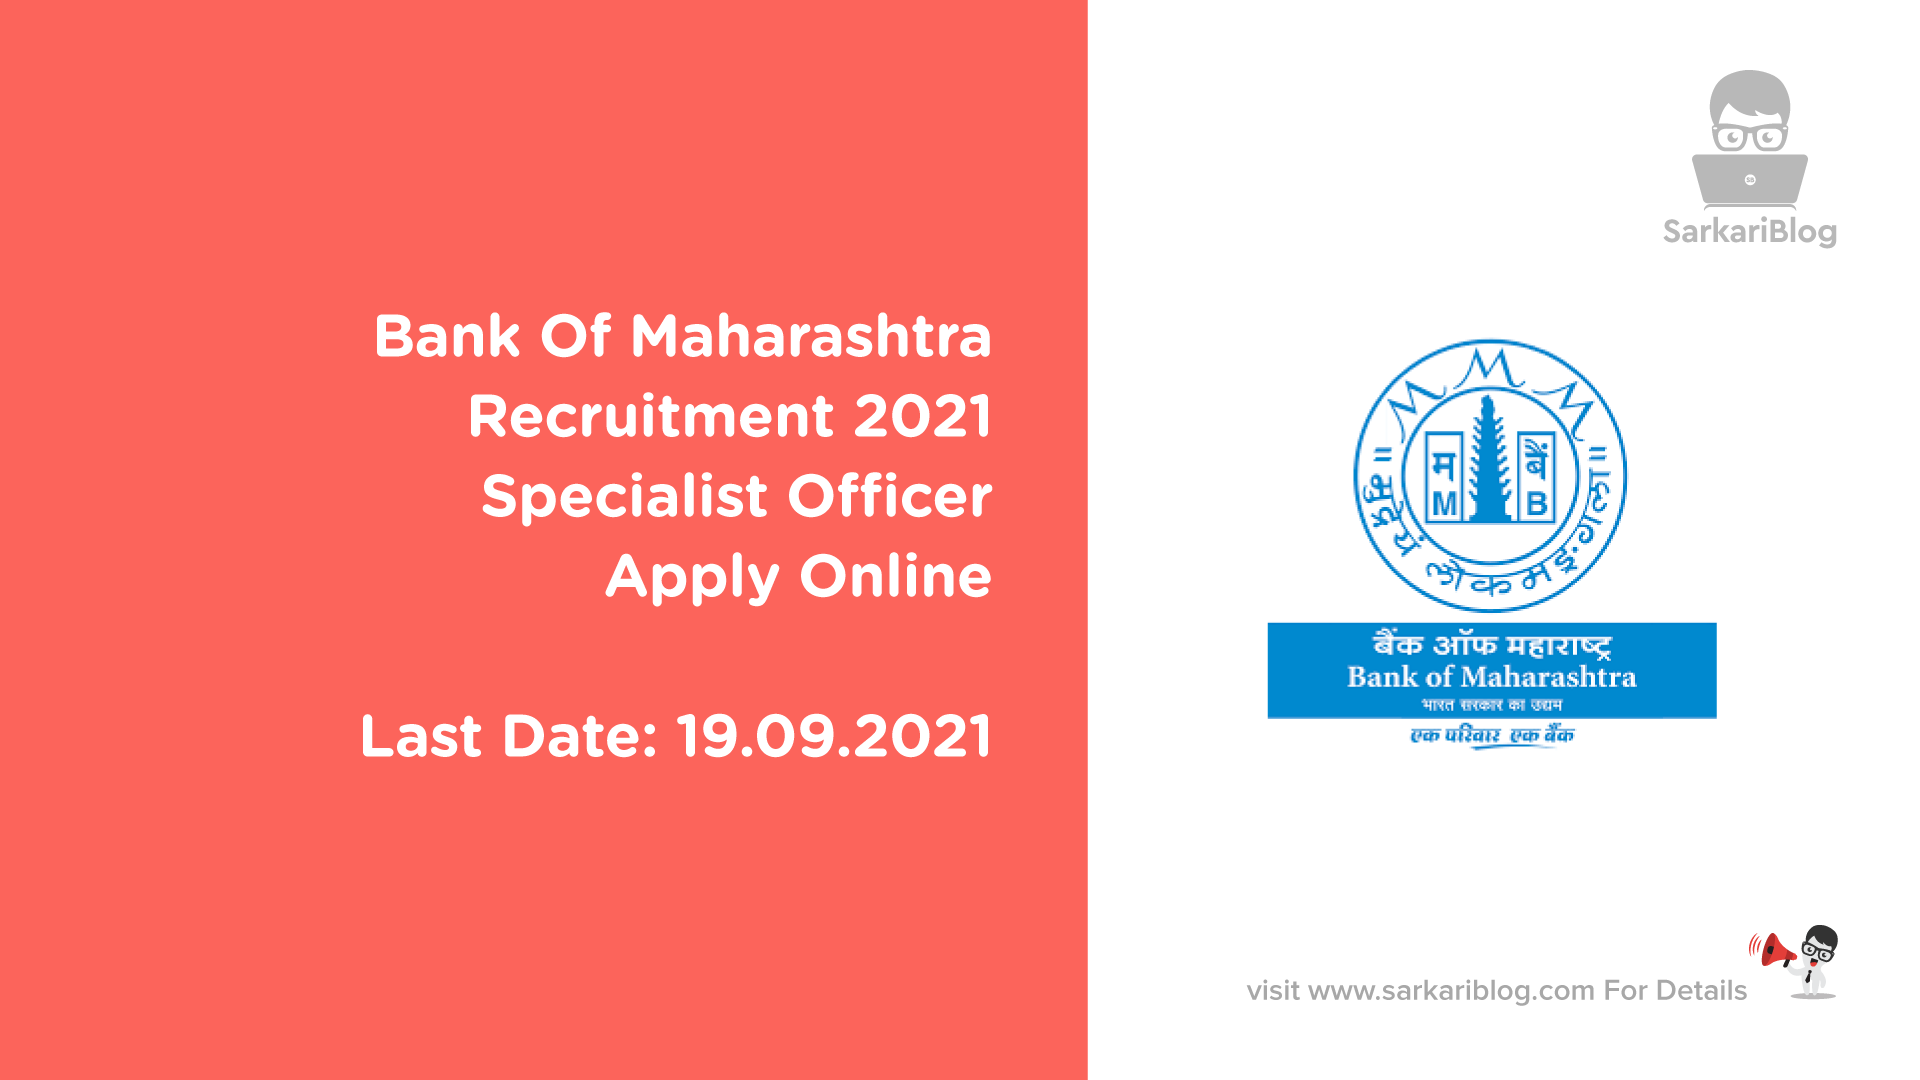 Bank Of Maharashtra Recruitment 2021 Specialist Officer Apply Online